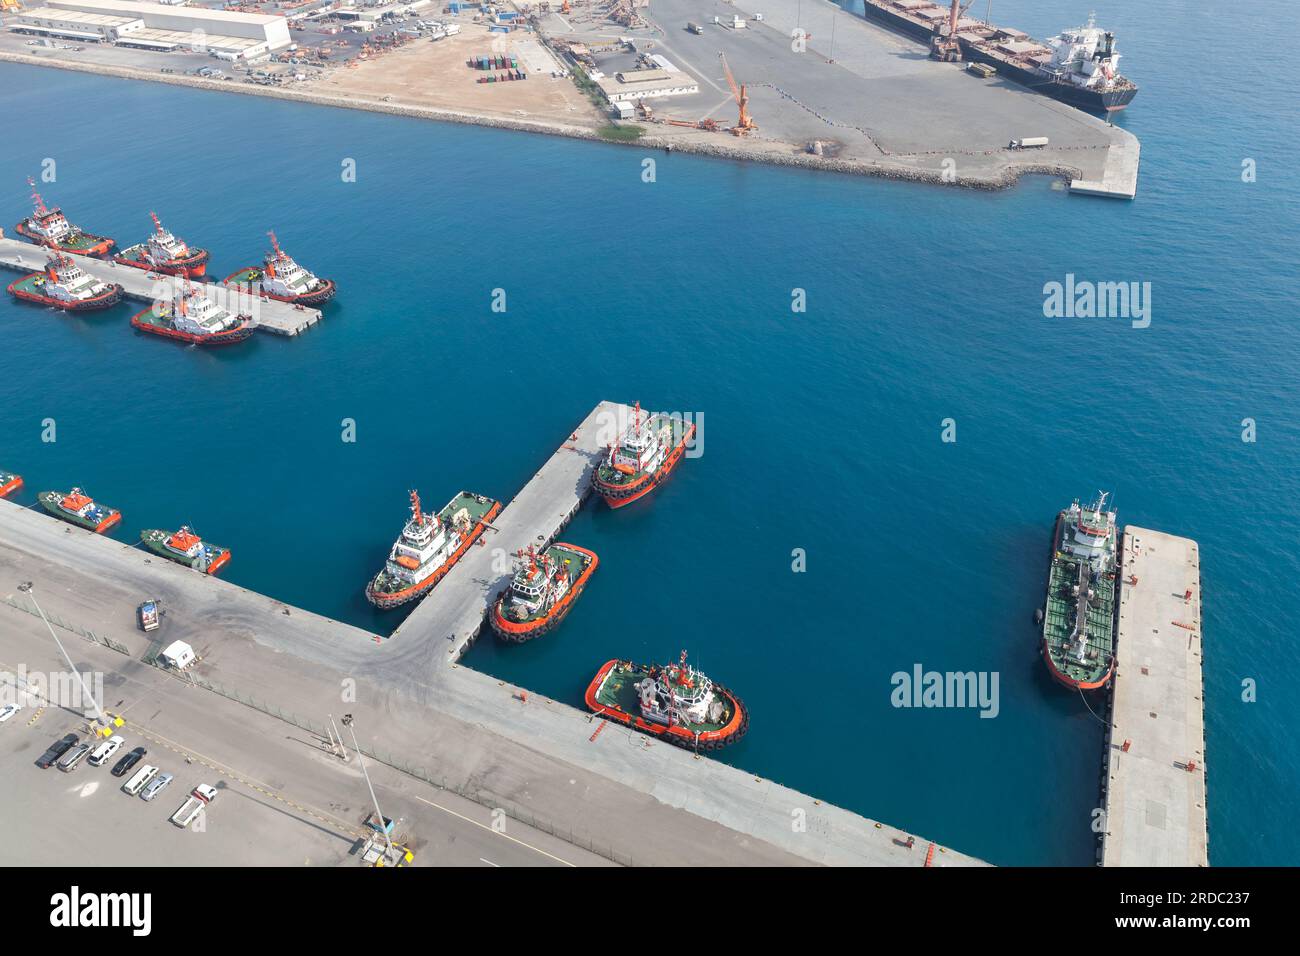 Fleet of tug boats of Jeddah Islamic Seaport, aerial photo taken on a sunny day Stock Photo